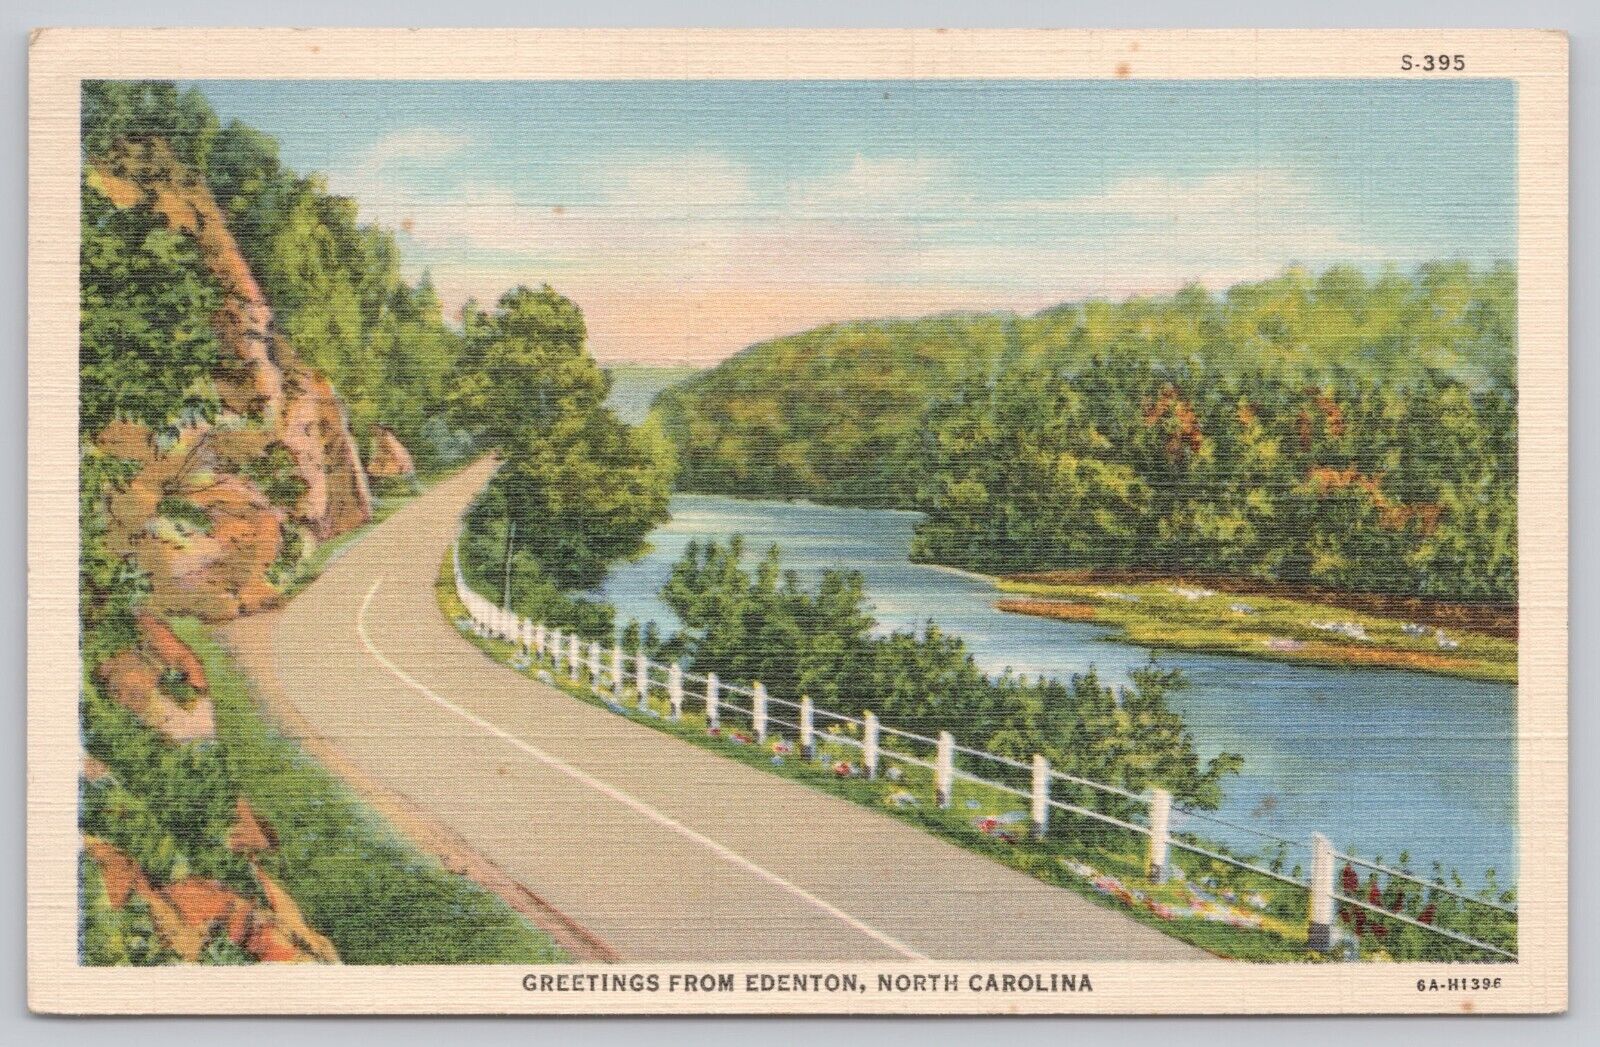 Edenton North Carolina, Greetings, Highway River Scenic View, Vintage Postcard